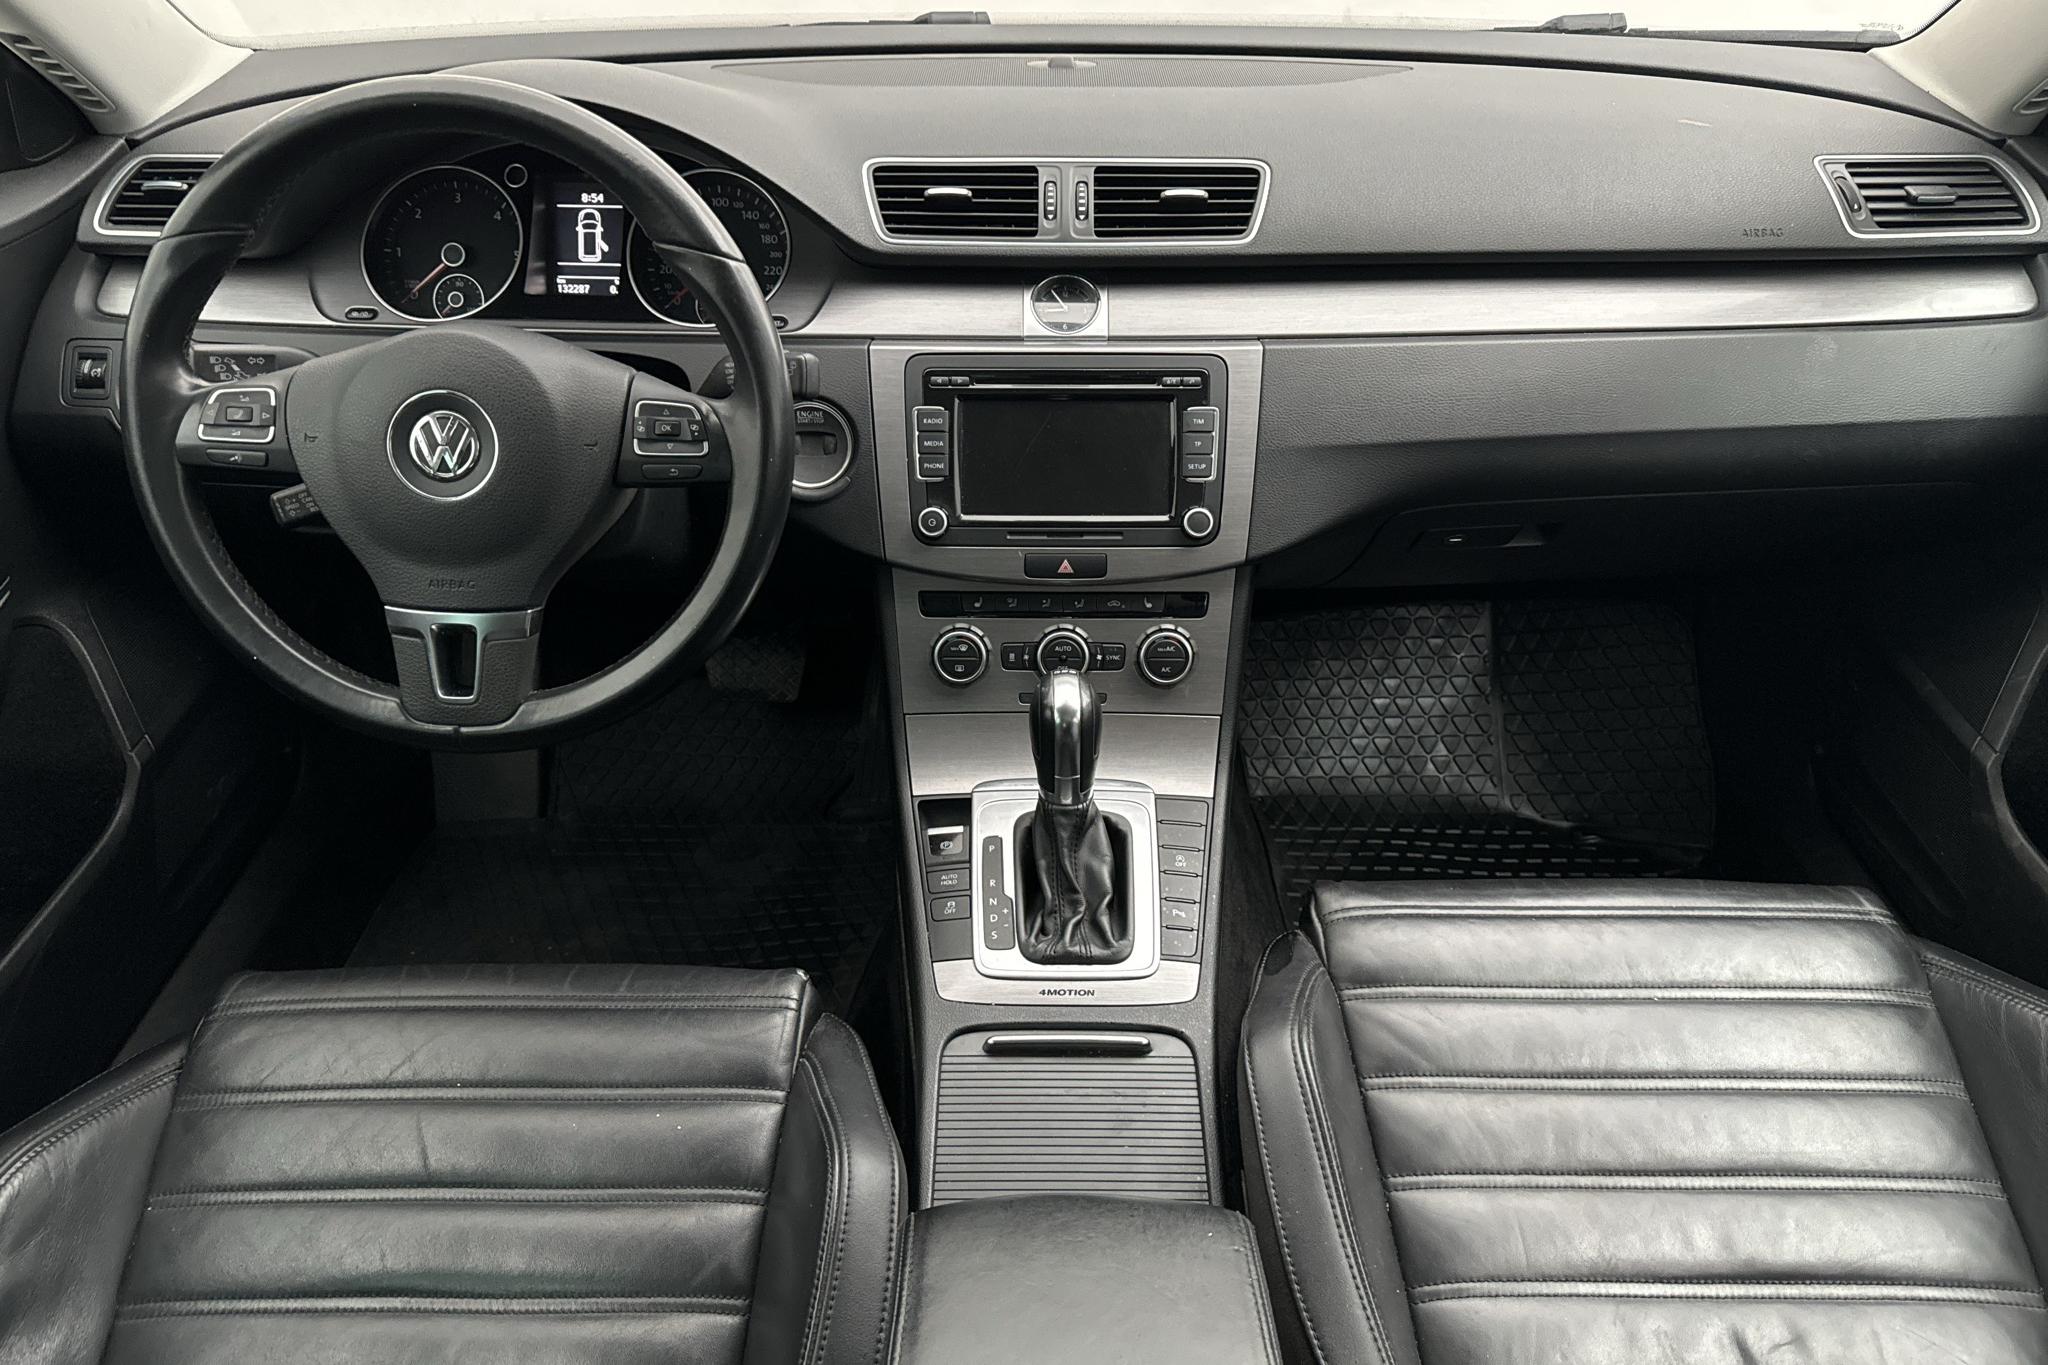 VW Passat 2.0 TDI BlueMotion Technology Variant 4Motion (177hk) - 132 290 km - Automatic - white - 2014